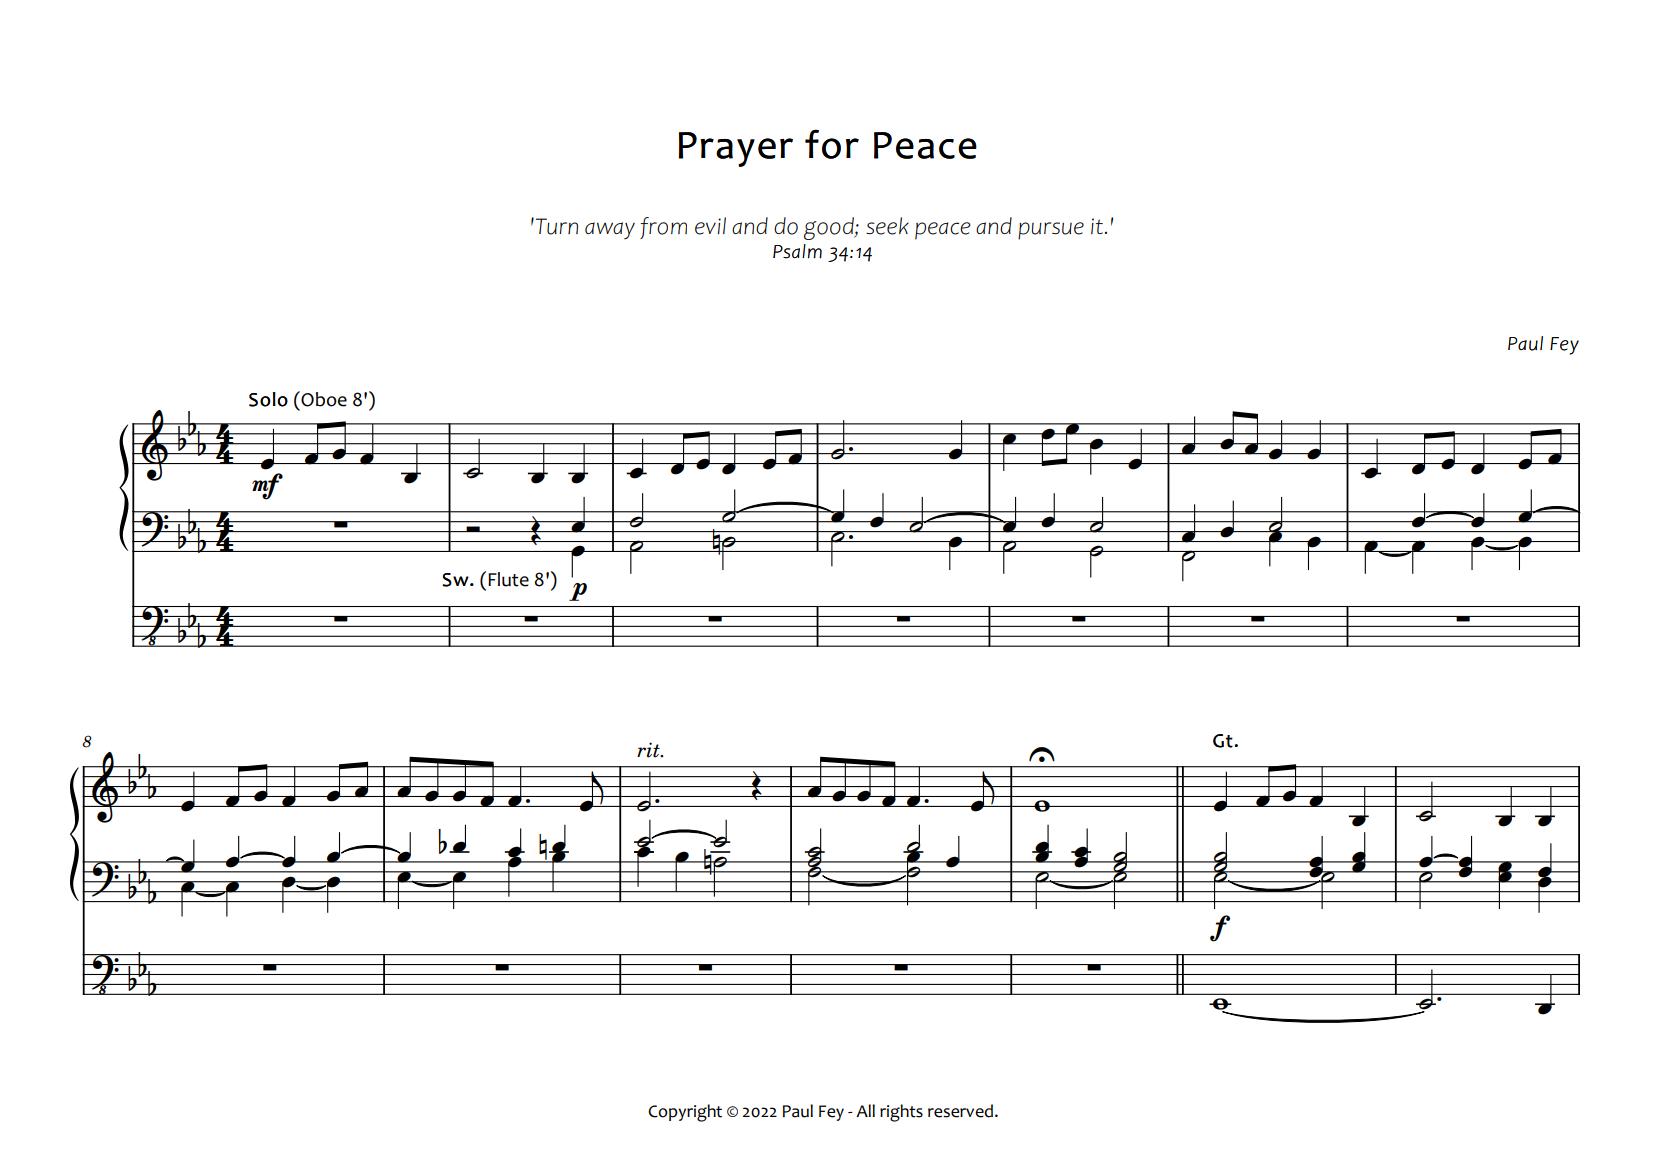 Prayer for Peace" for Pipe Organ (Sheet Music) - Music for Organ by Pau lFey